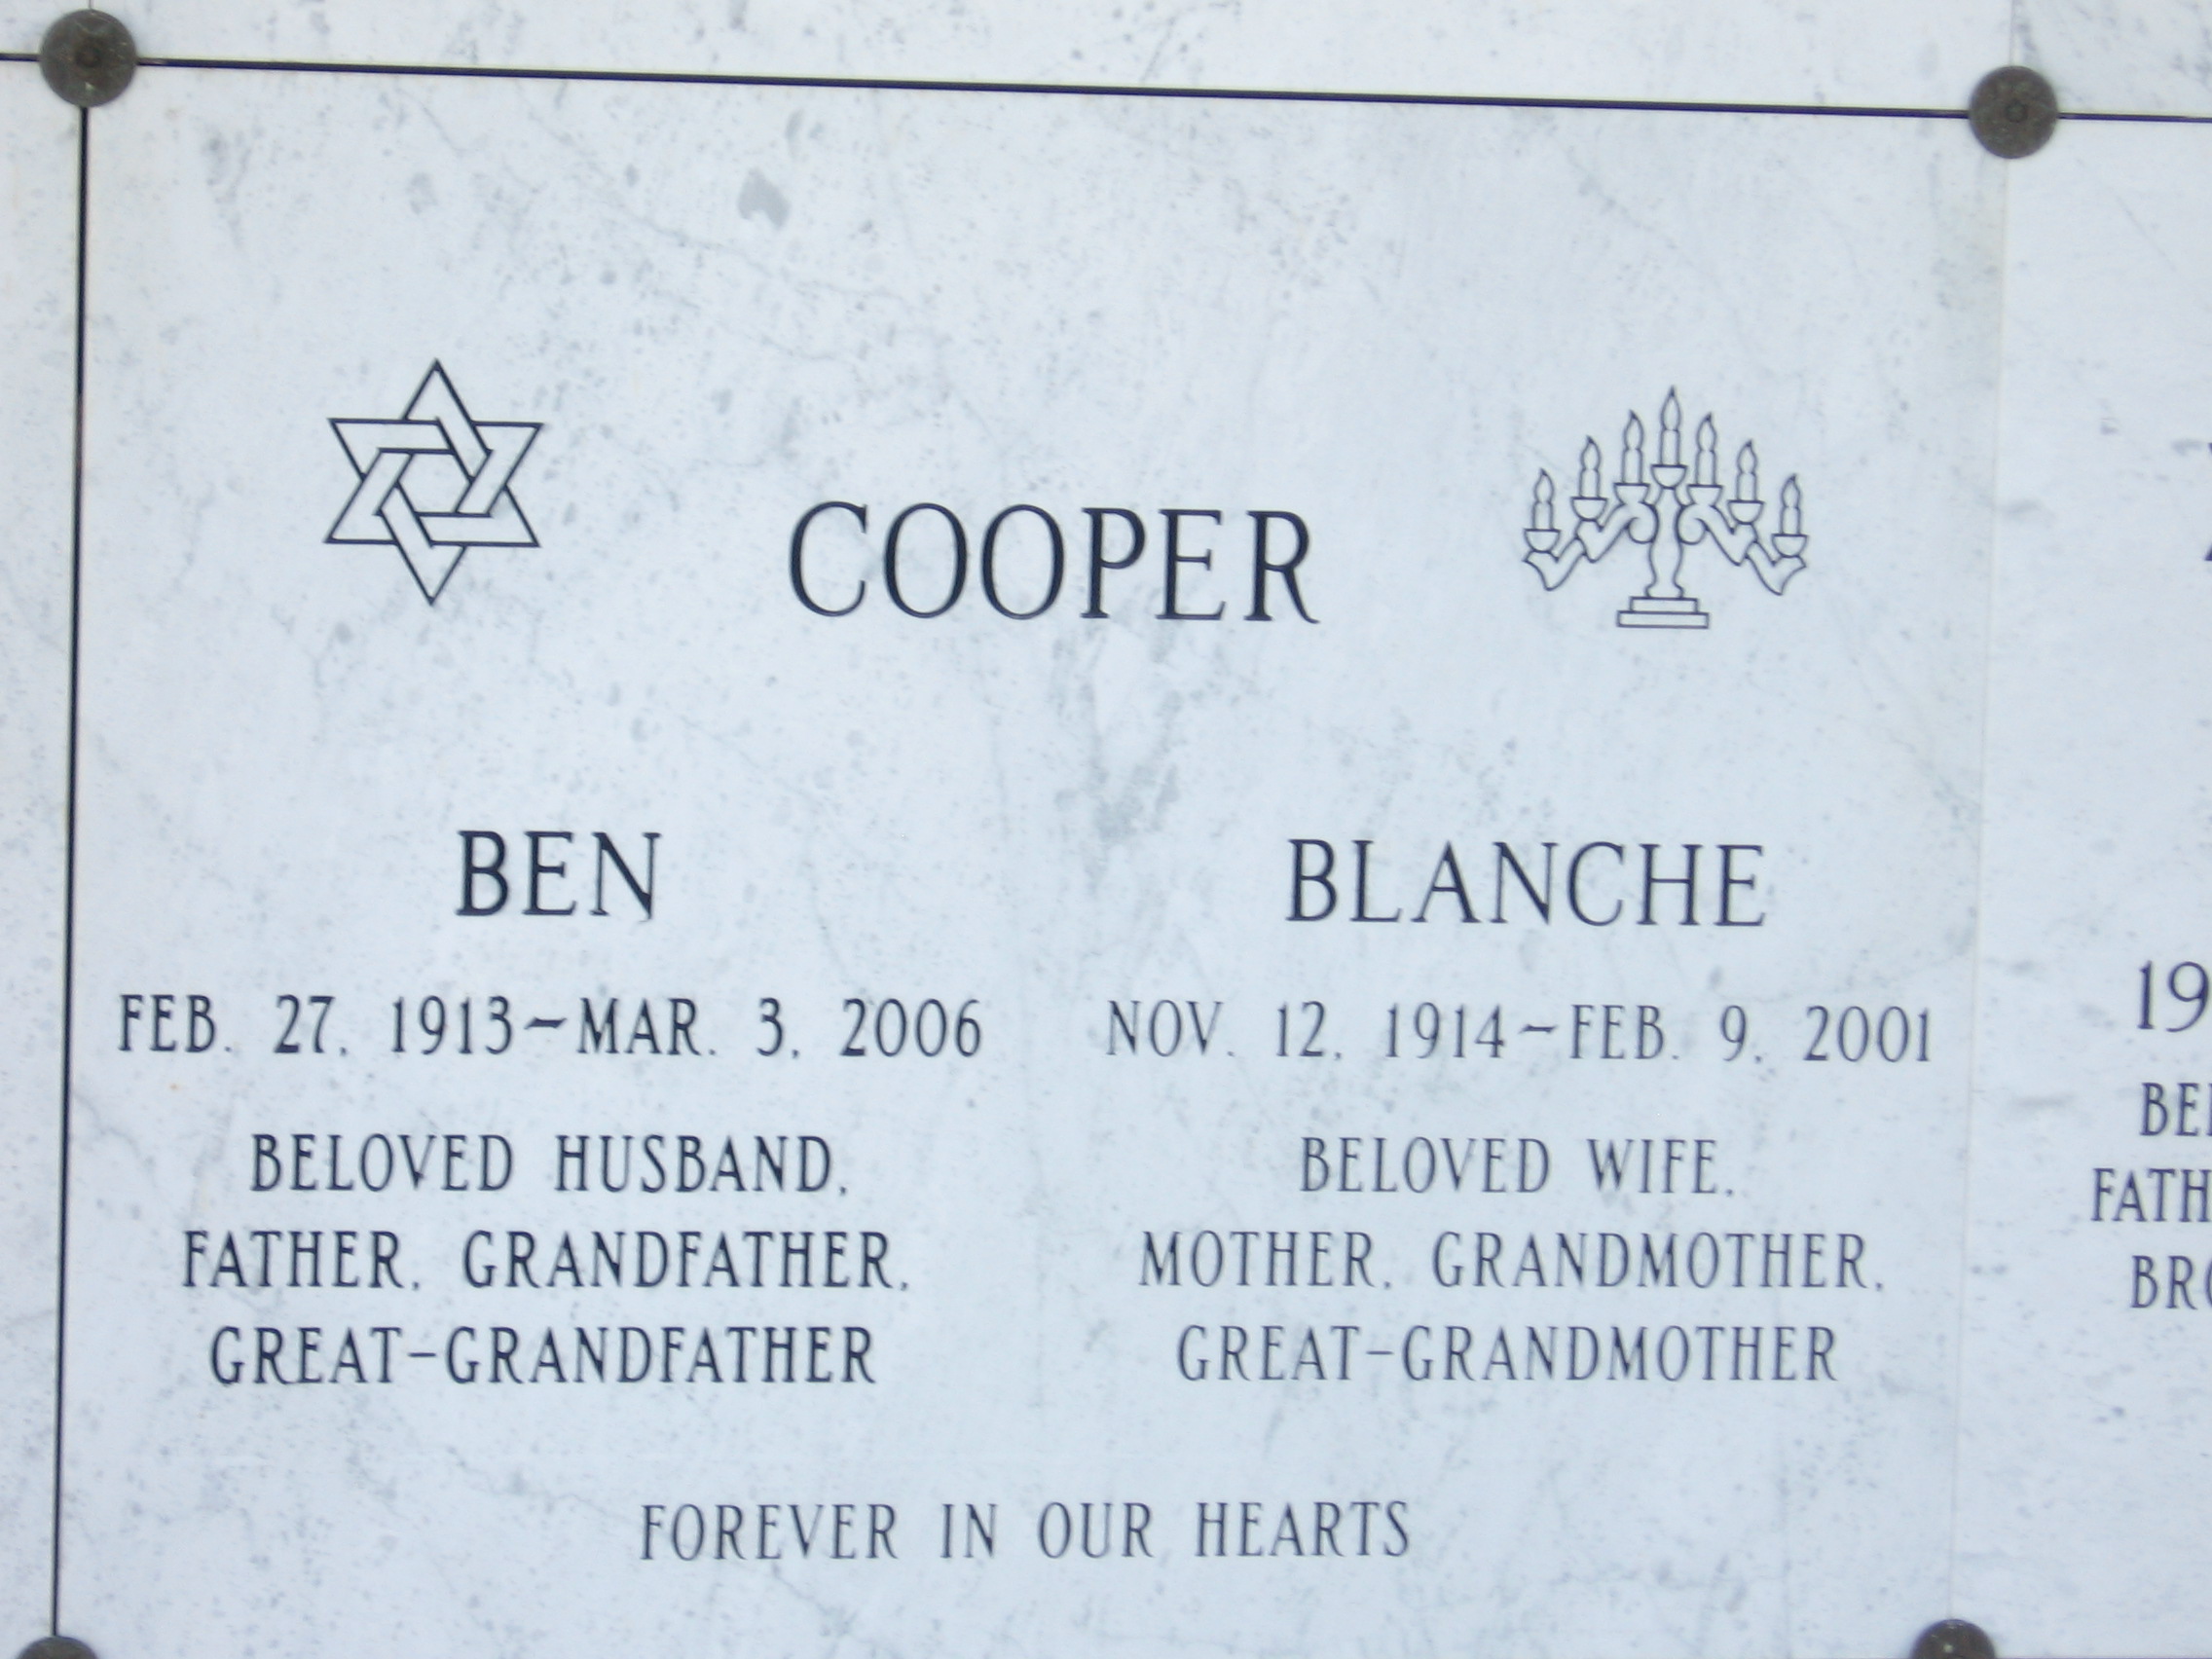 Blanche Cooper